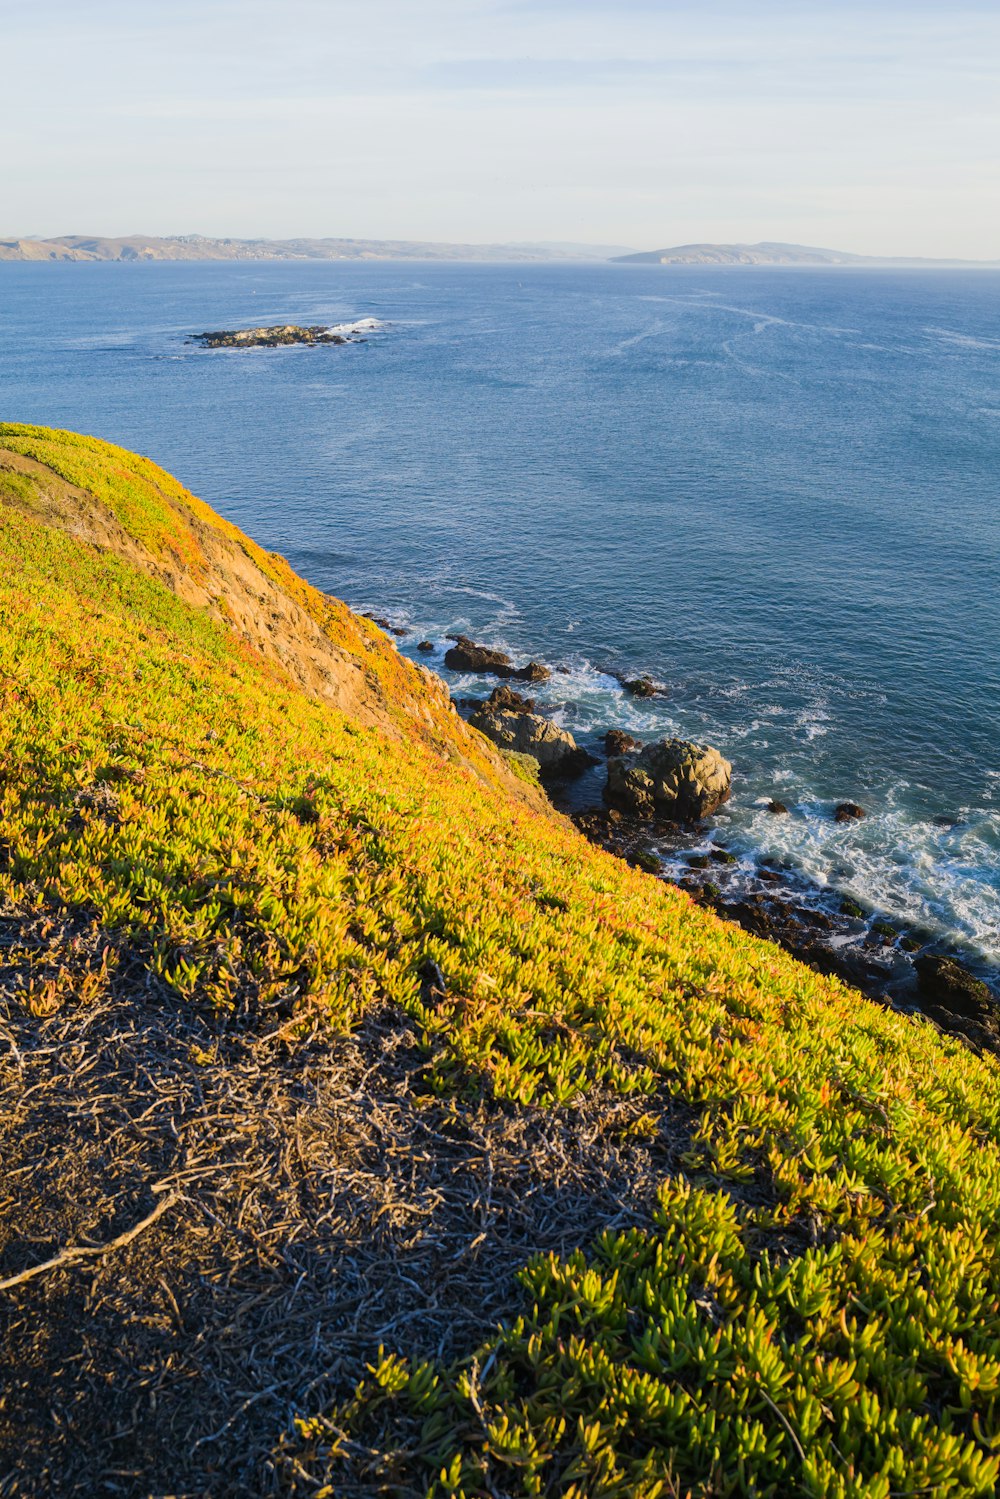 Una panchina seduta in cima a una lussureggiante collina verde vicino all'oceano